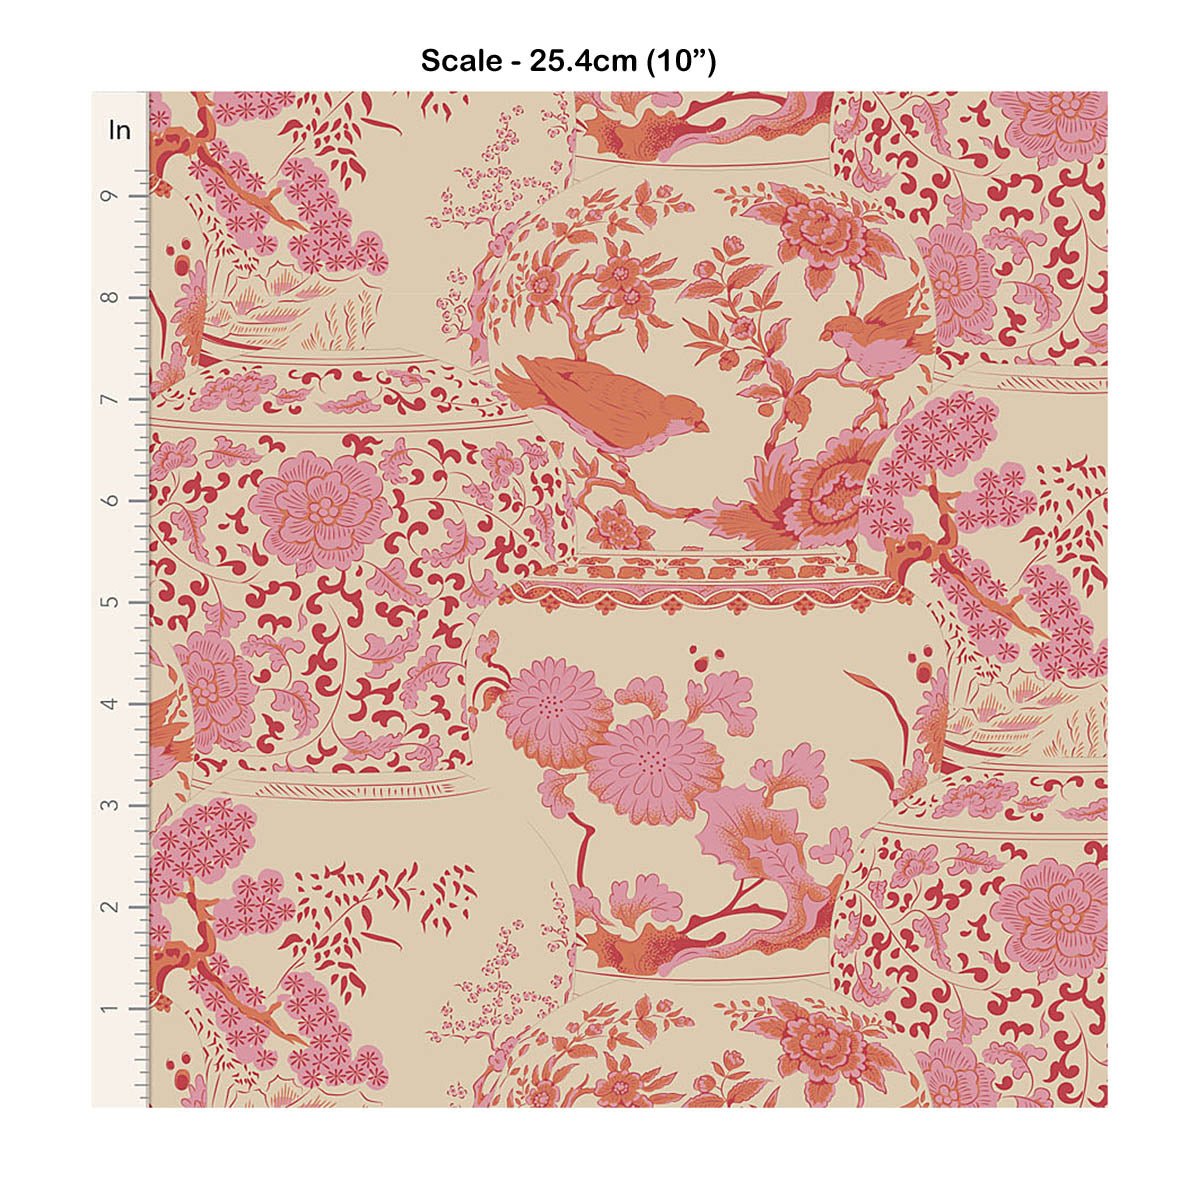 Tilda CHIC ESCAPE - Vase Collection Pink - #100460